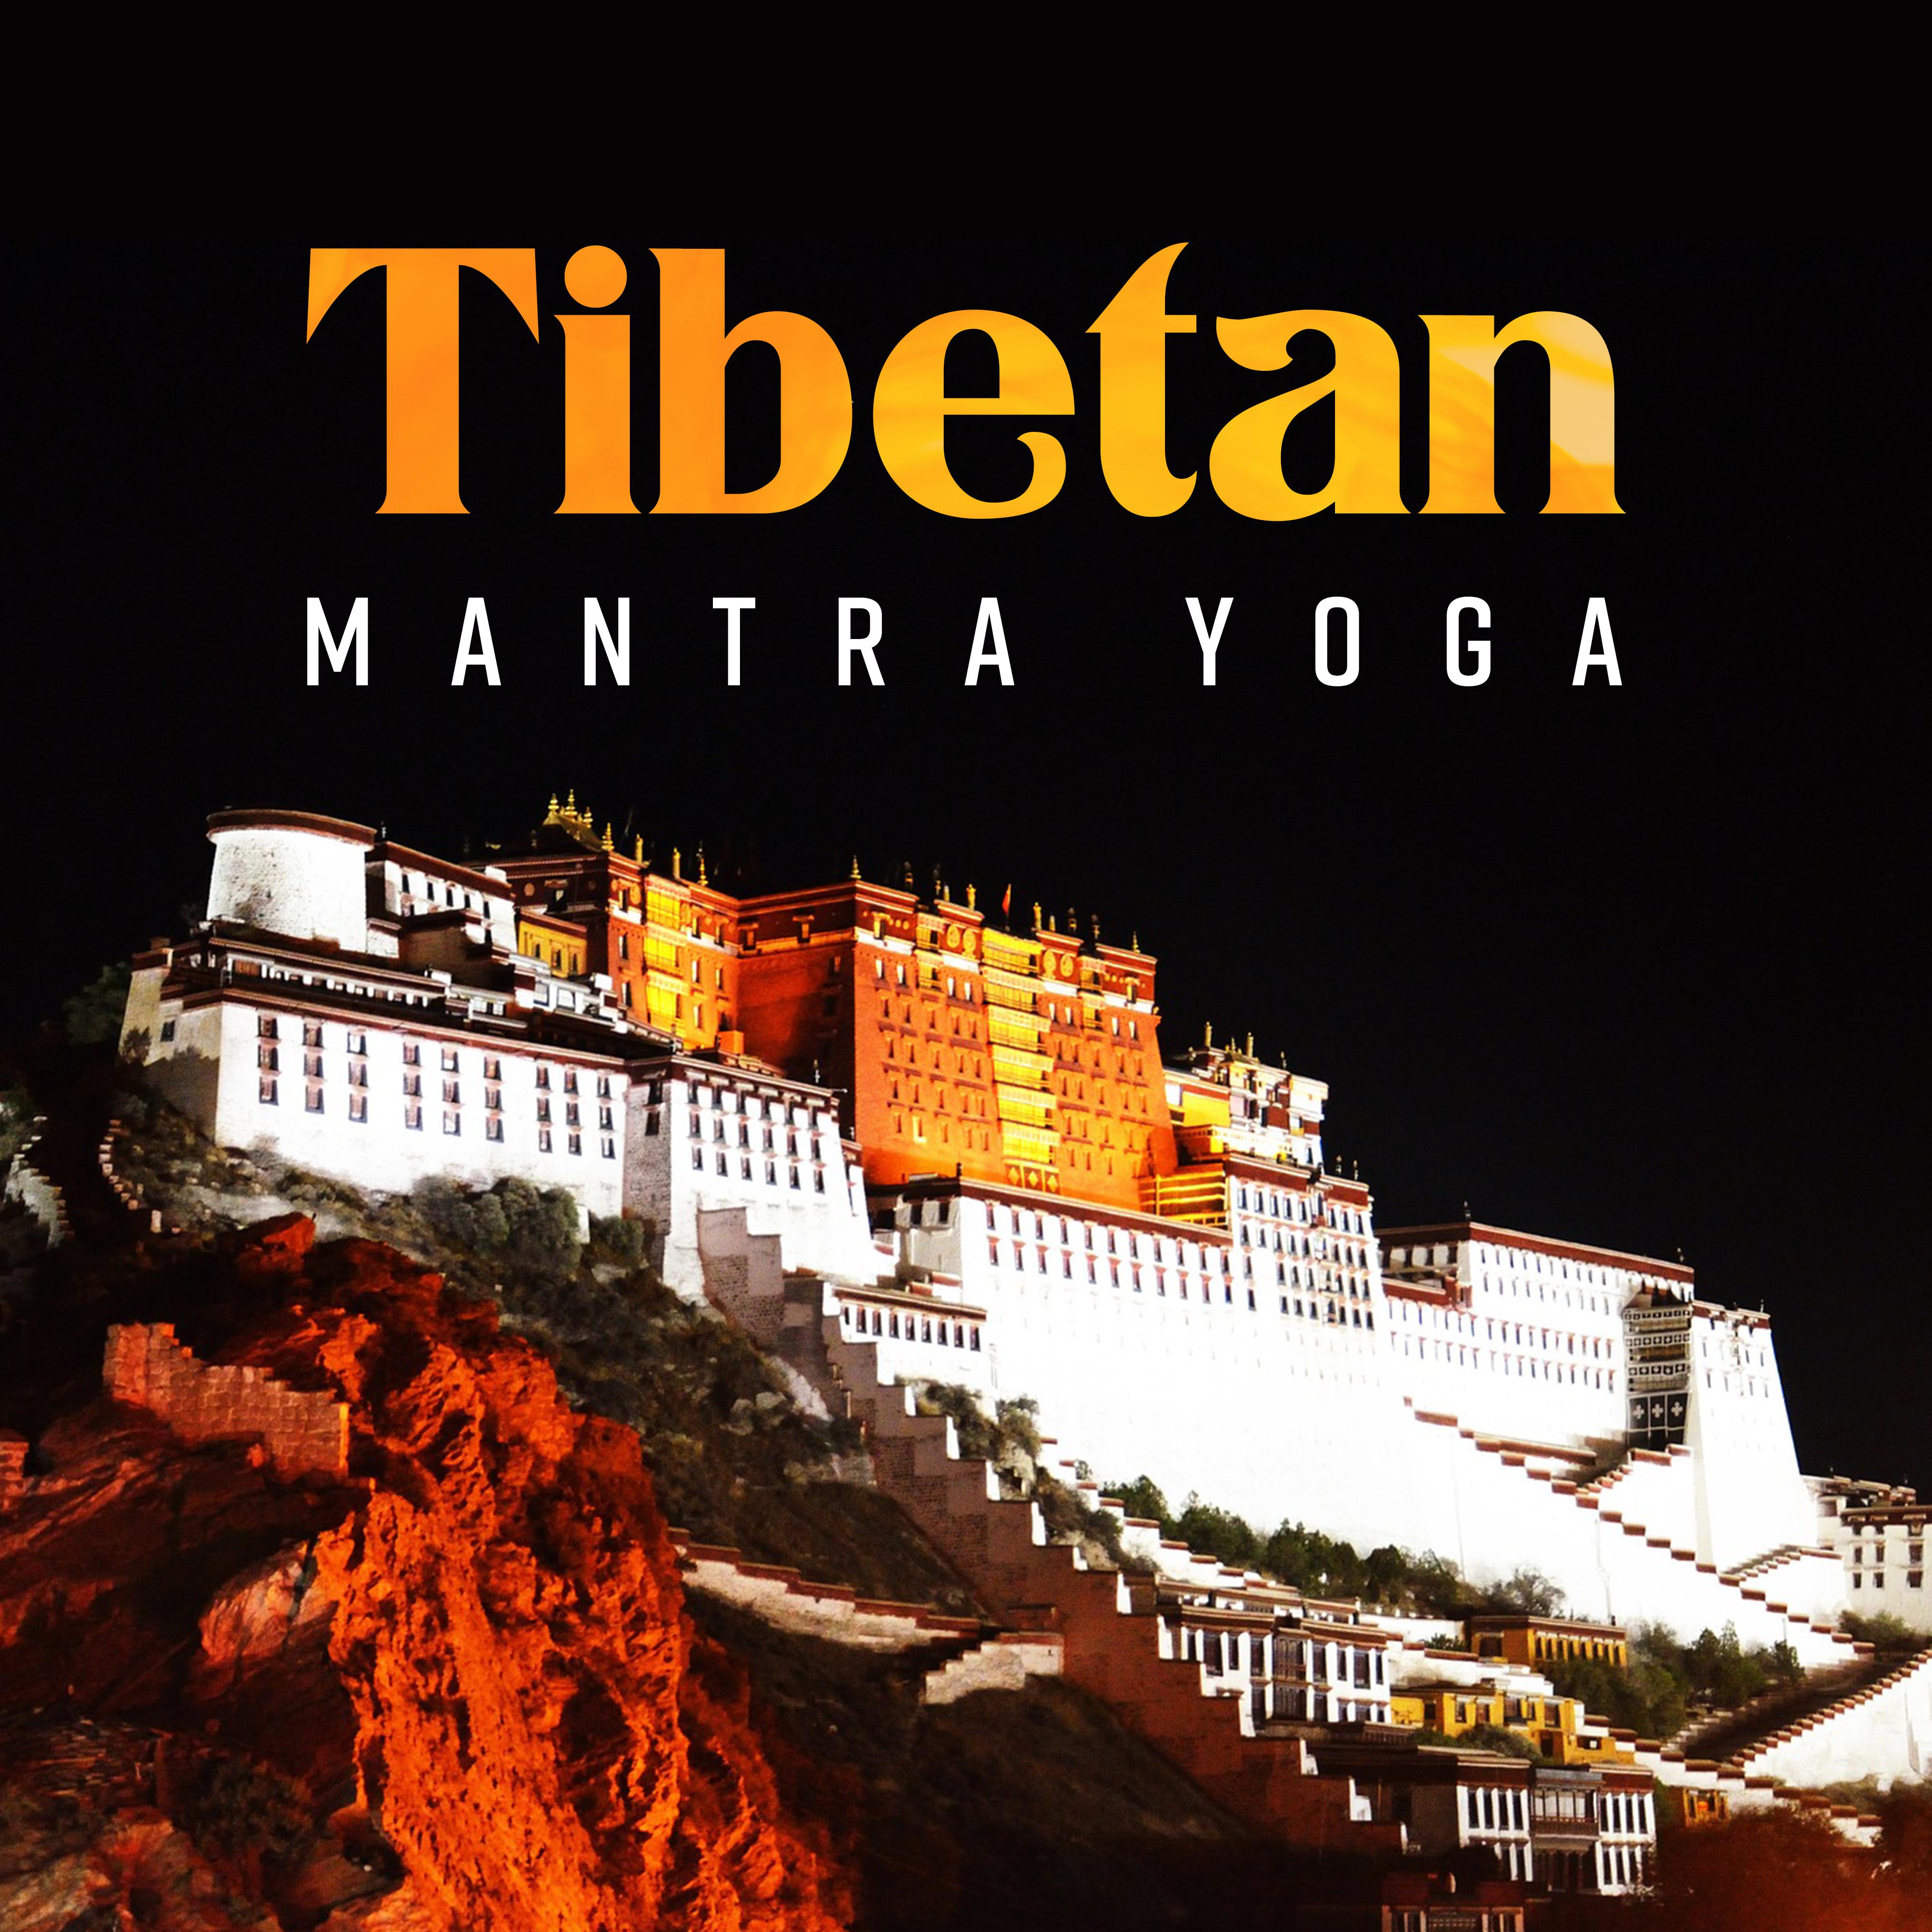 Tibetan Mantra Yoga